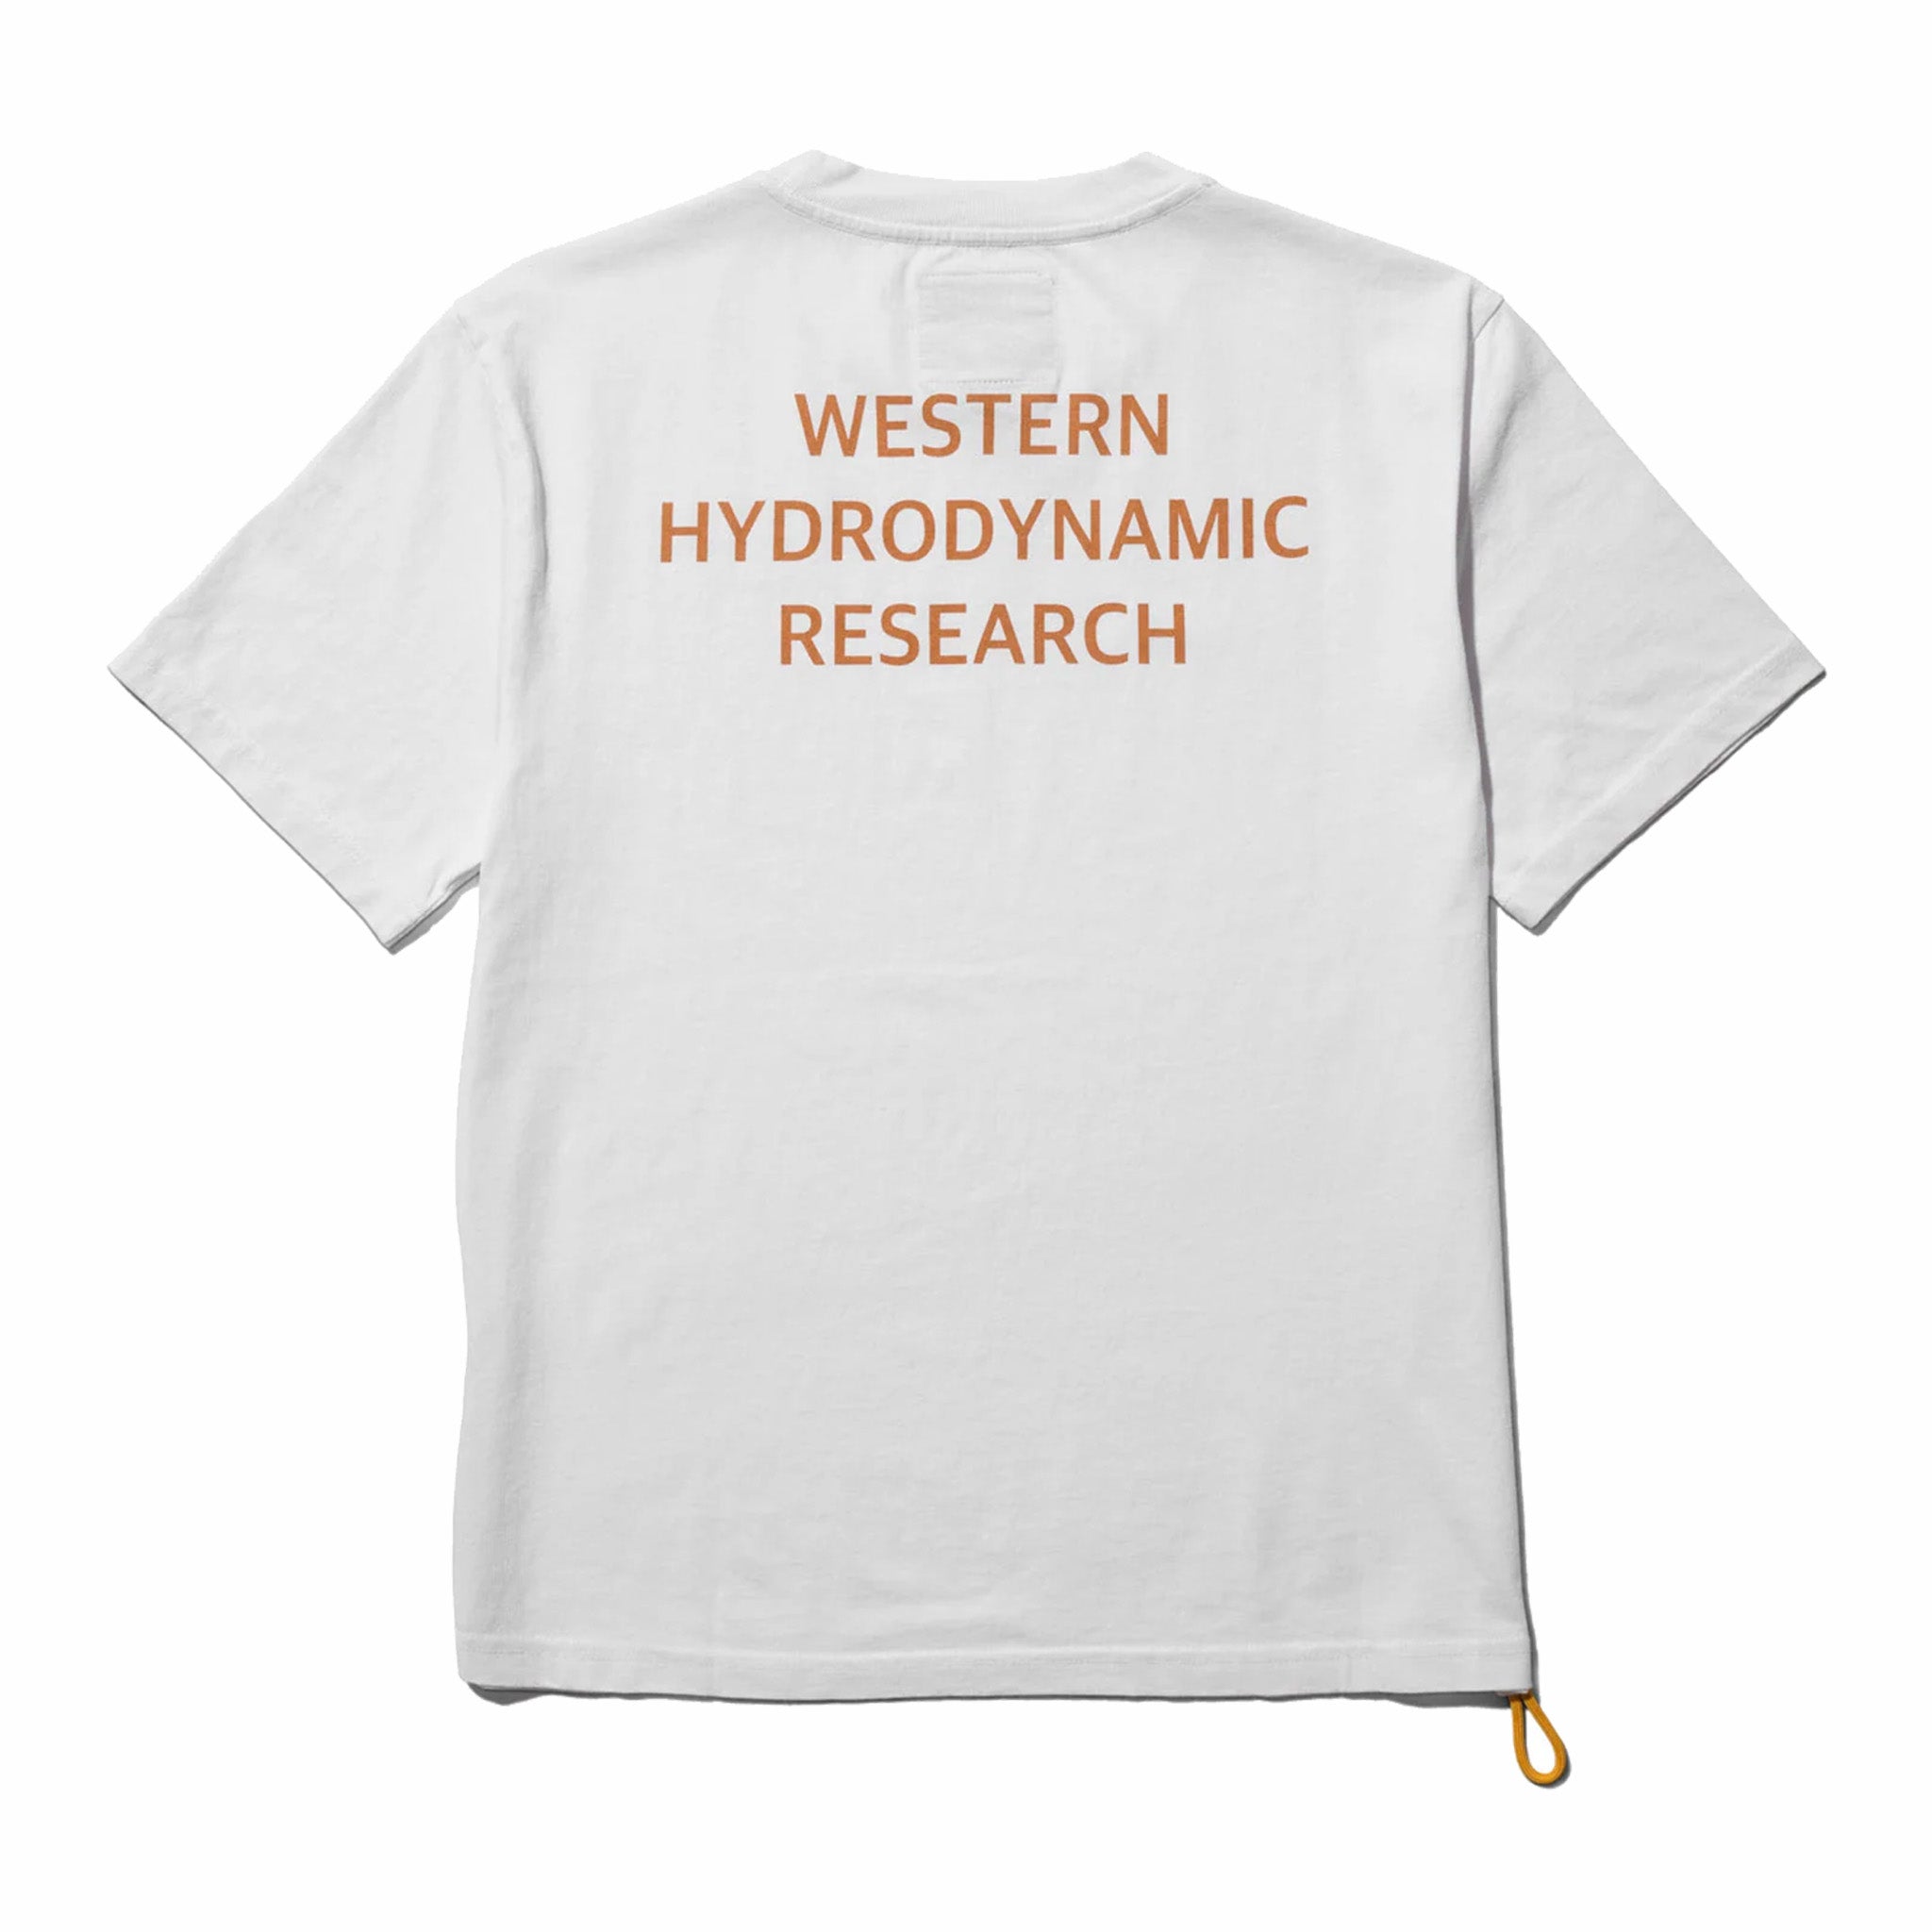 Ricerca idrodinamica occidentale, Maglietta da lavoro per i ricercatori idrodinamici occidentali (bianca)